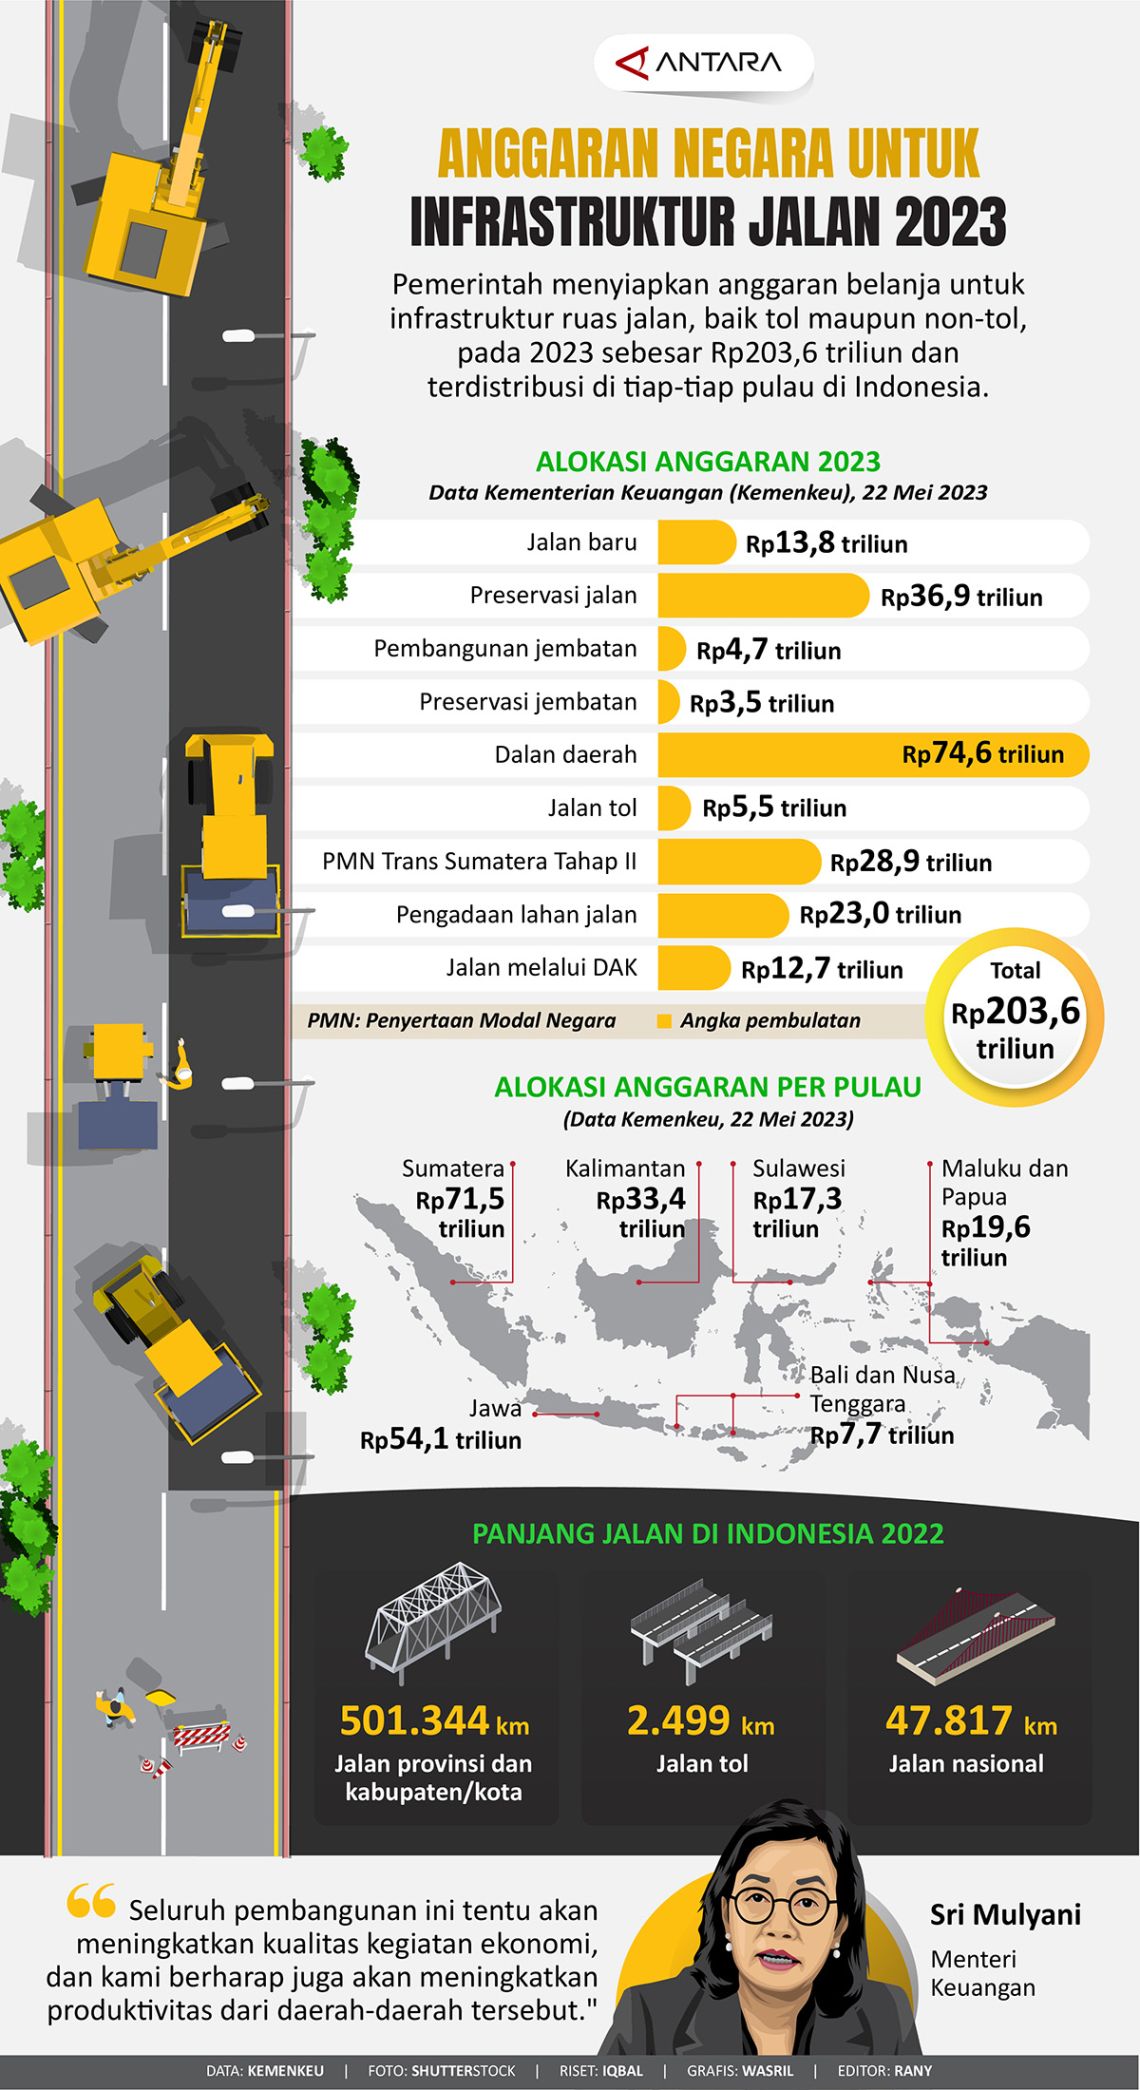 Anggaran Negara untuk Infrastruktur Jalan 2023